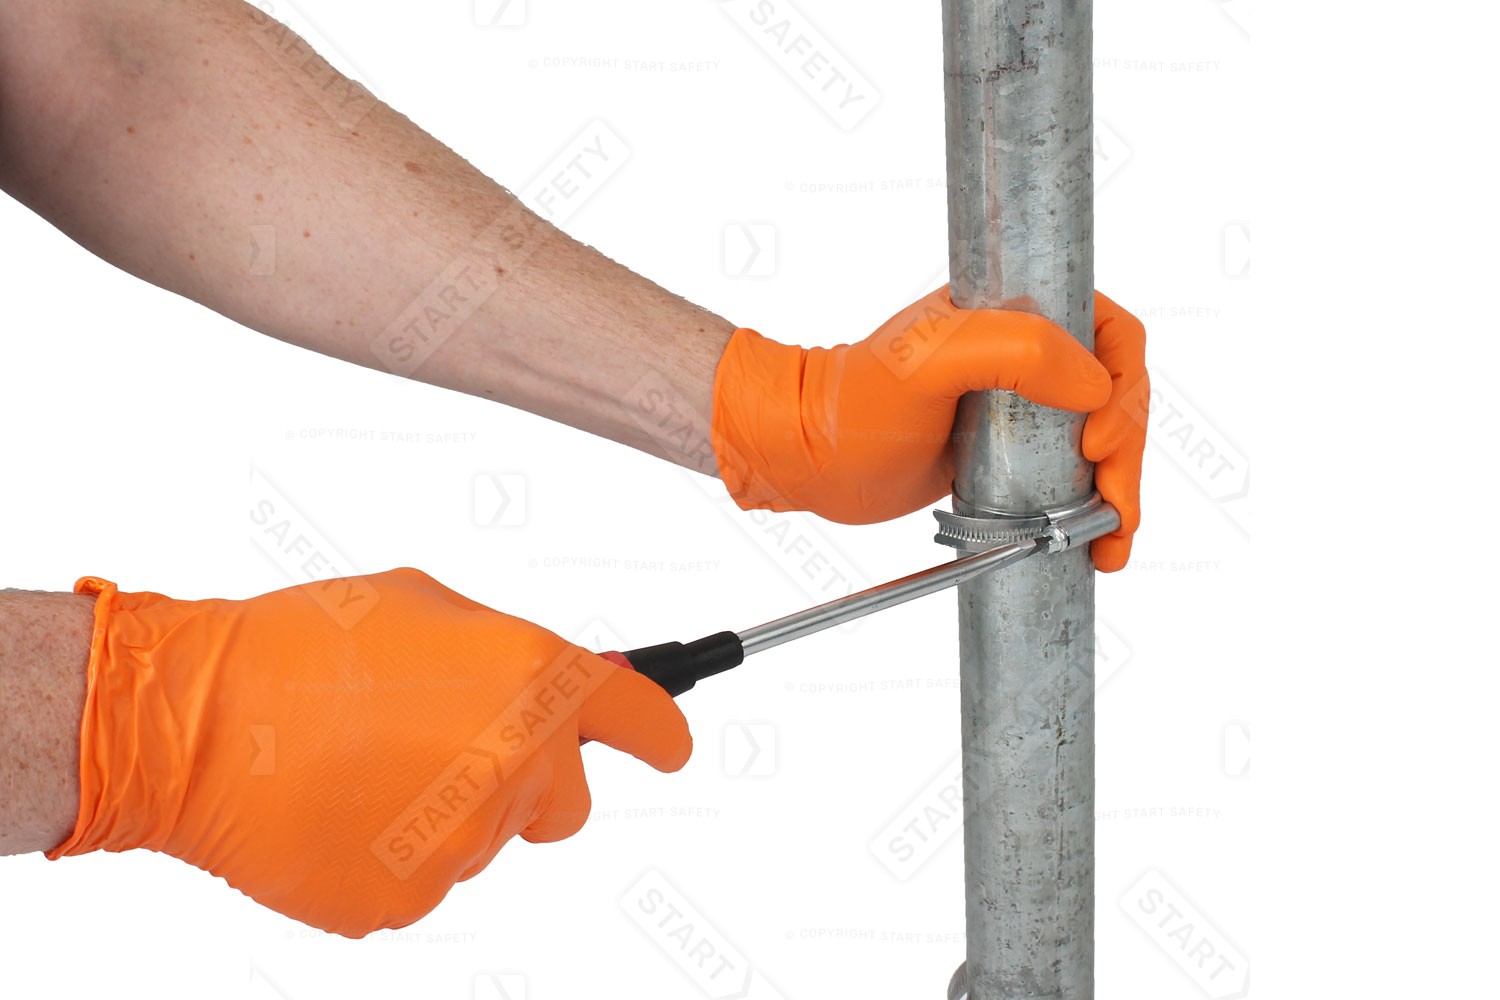 SW Orange Gripper Disposable Gloves In Use